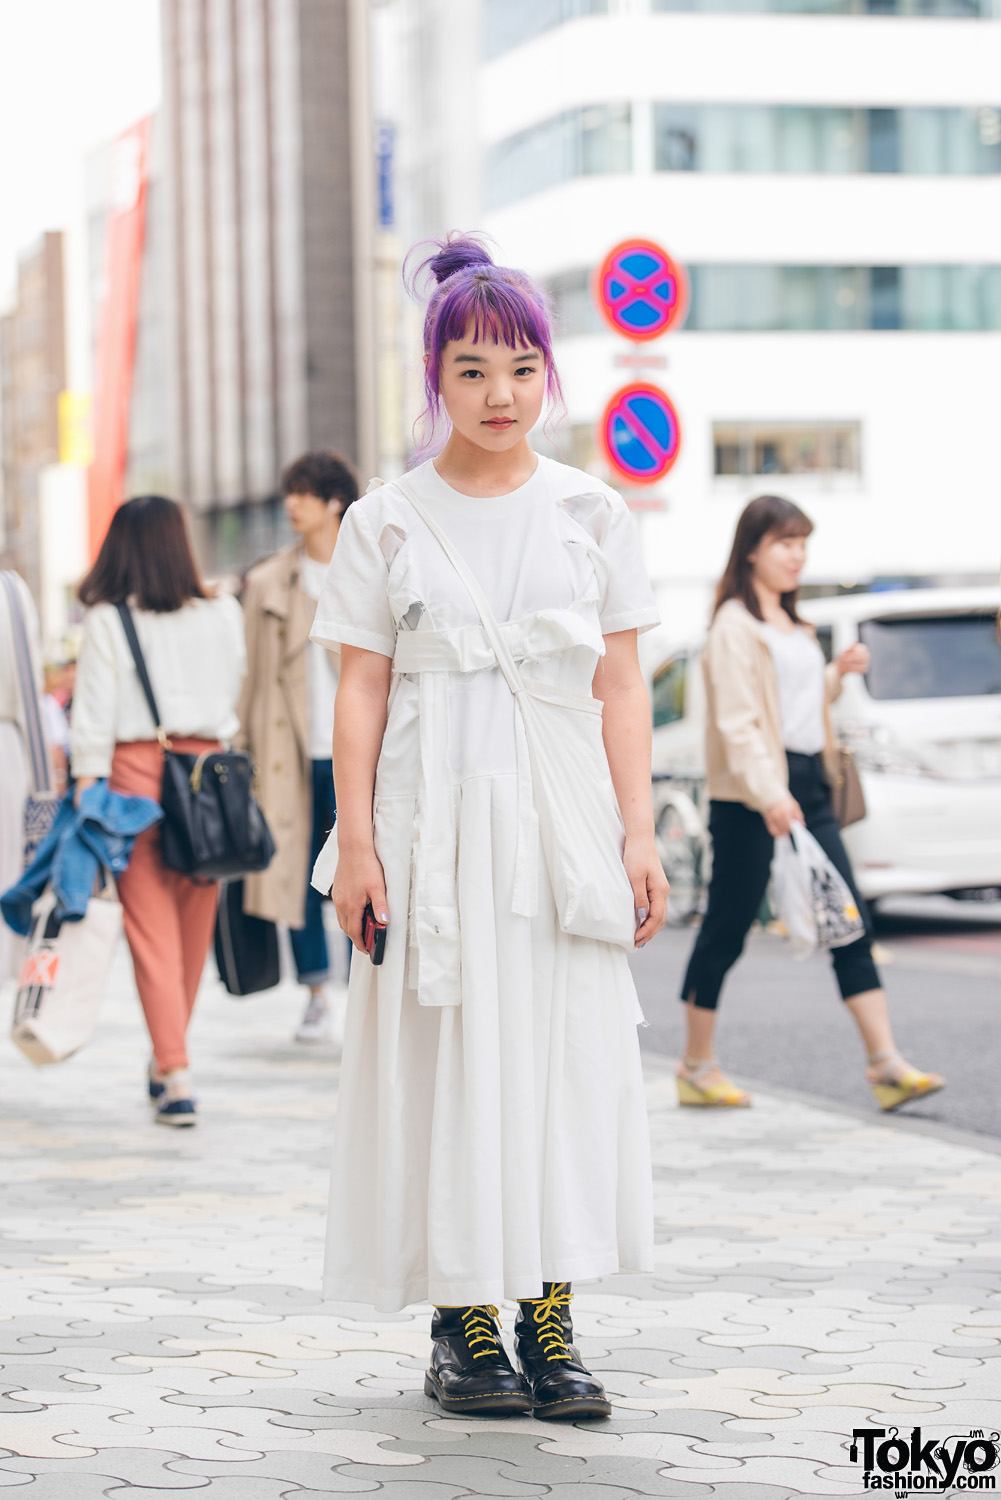 Minimalist Monochrome Fashion in Harajuku w/ Comme des Garcons Dress & Dr. Martens Boots